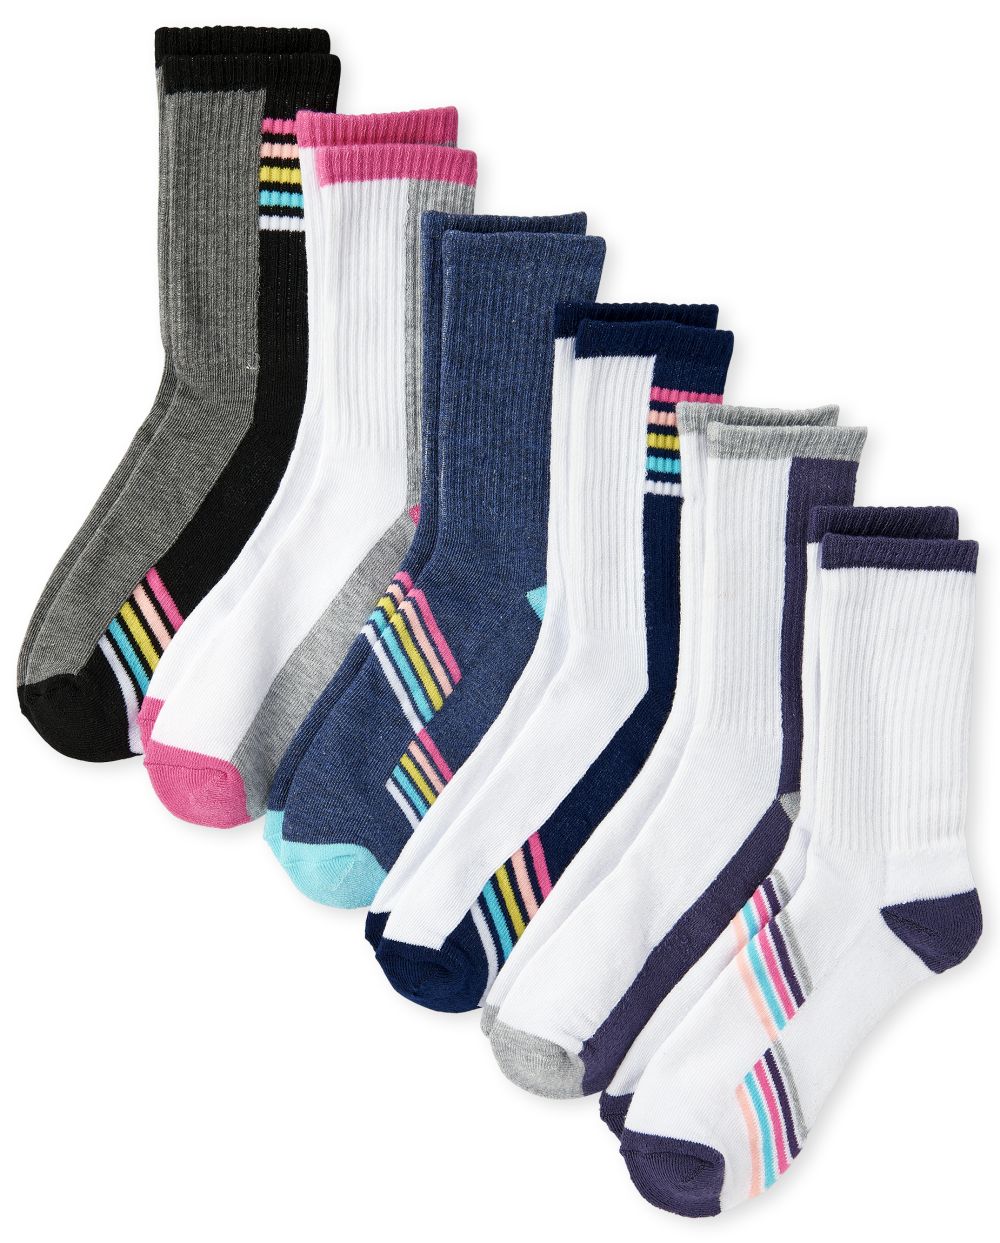 Girls Rainbow Striped Athletic Crew Socks 6-Pack